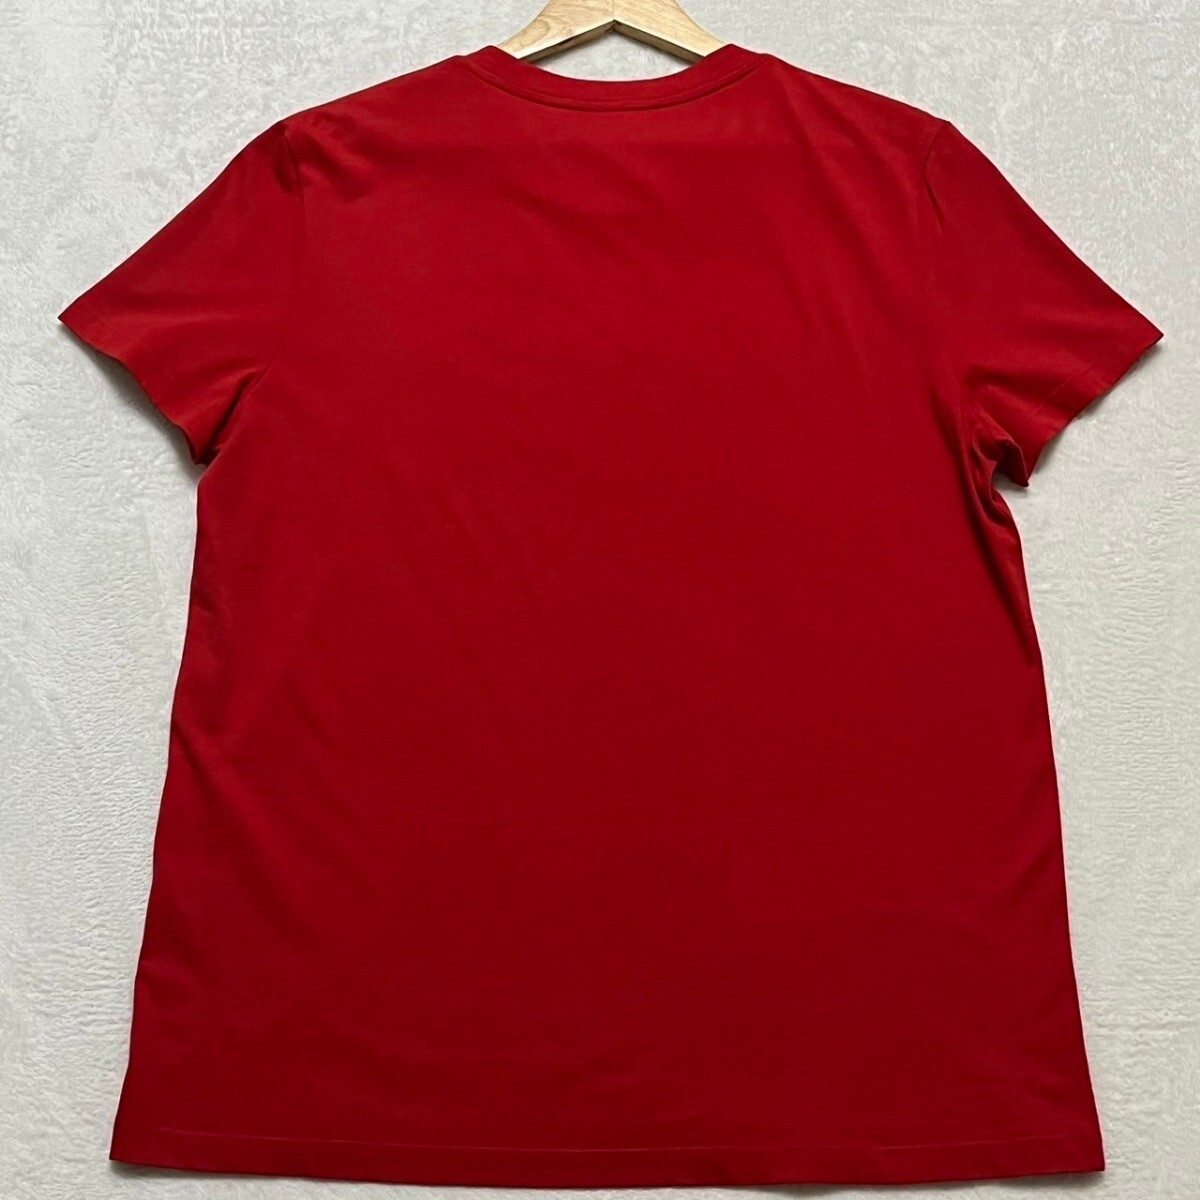  unused class /XL size *BALMAIN[ passion. red color ] Balmain men's tops T-shirt short sleeves 3D Logo front regular goods spring summer 